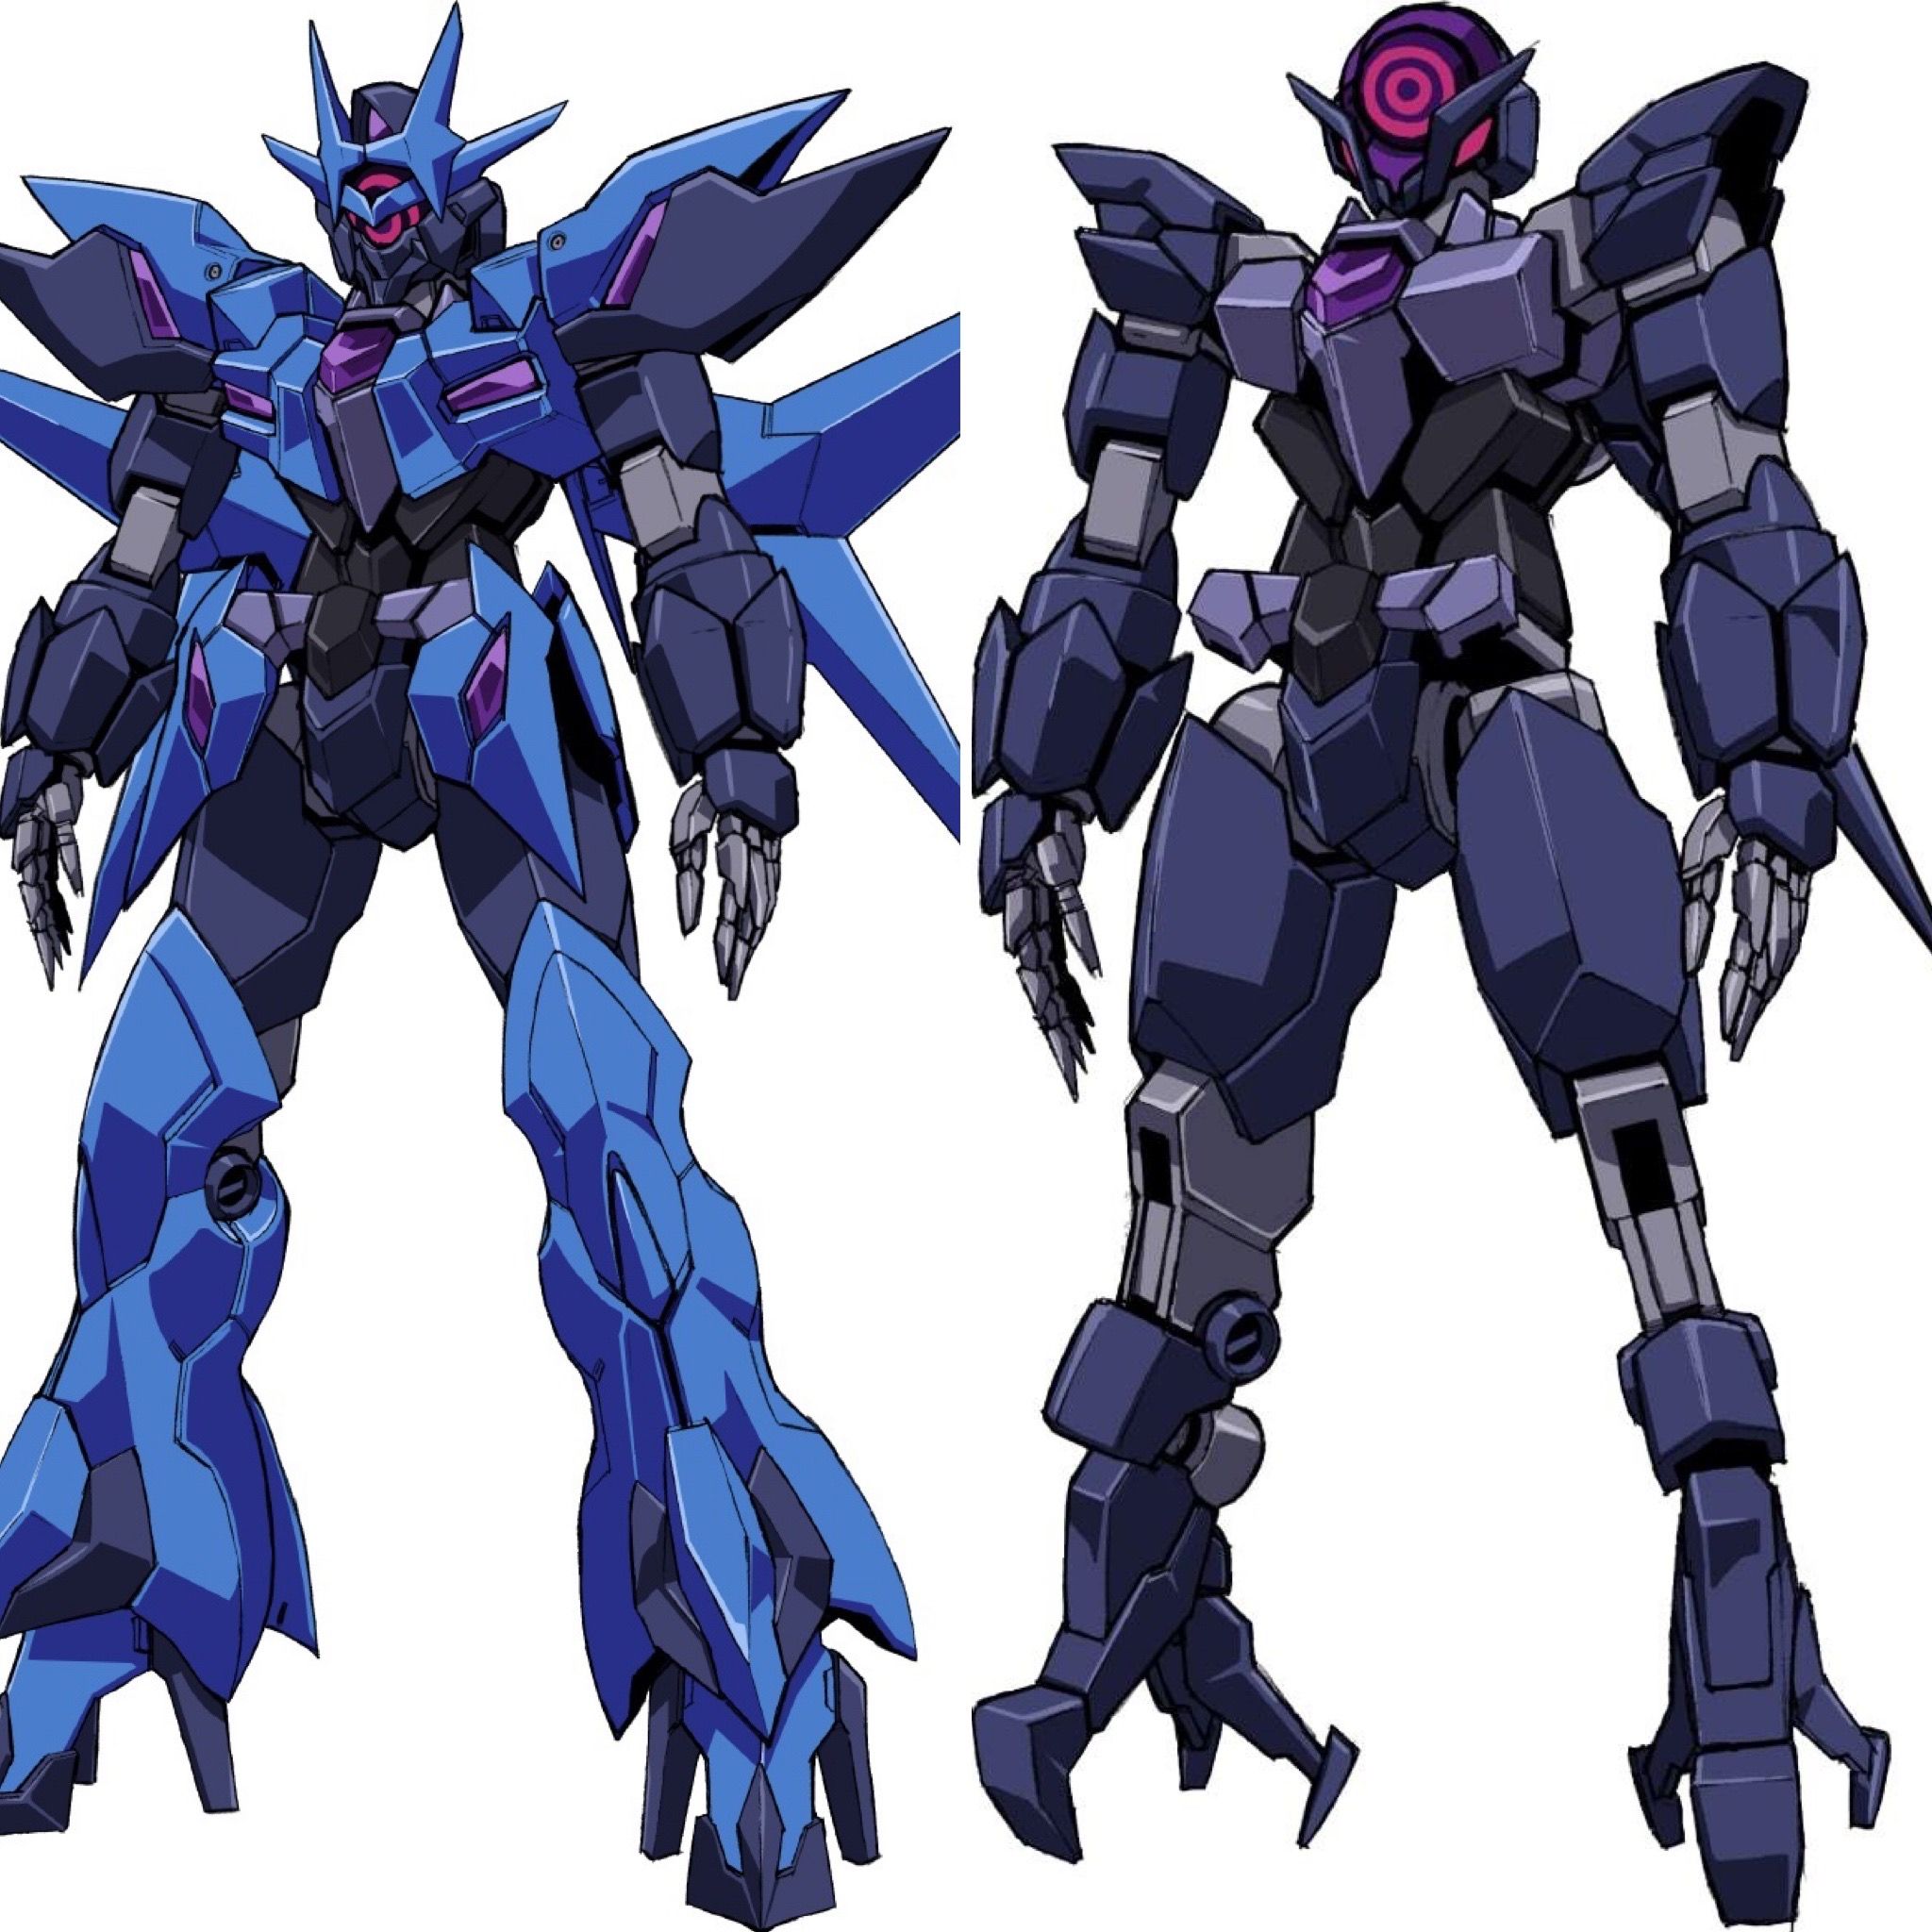 ALUS EARTHREE GUNDAM ALUS CORE GUNDAM (GBD Re: RISE 2nd Season) name released, image. Gundam art, Mecha anime, Concept art characters